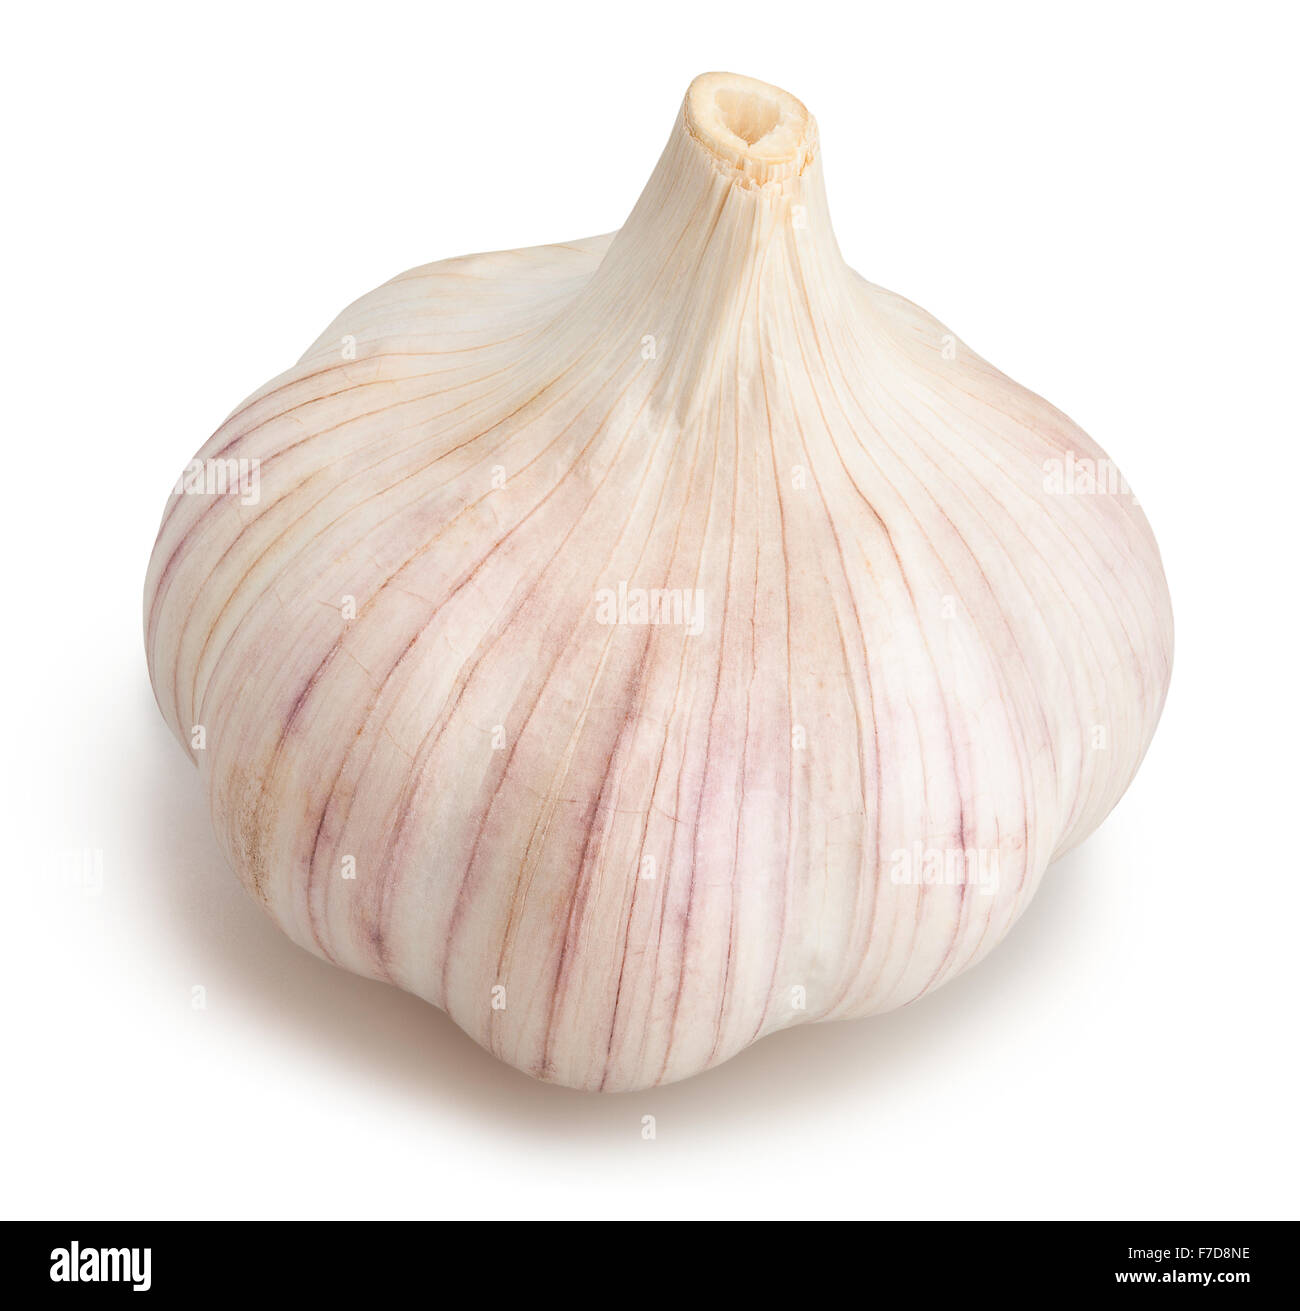 garlic isolated Stock Photo